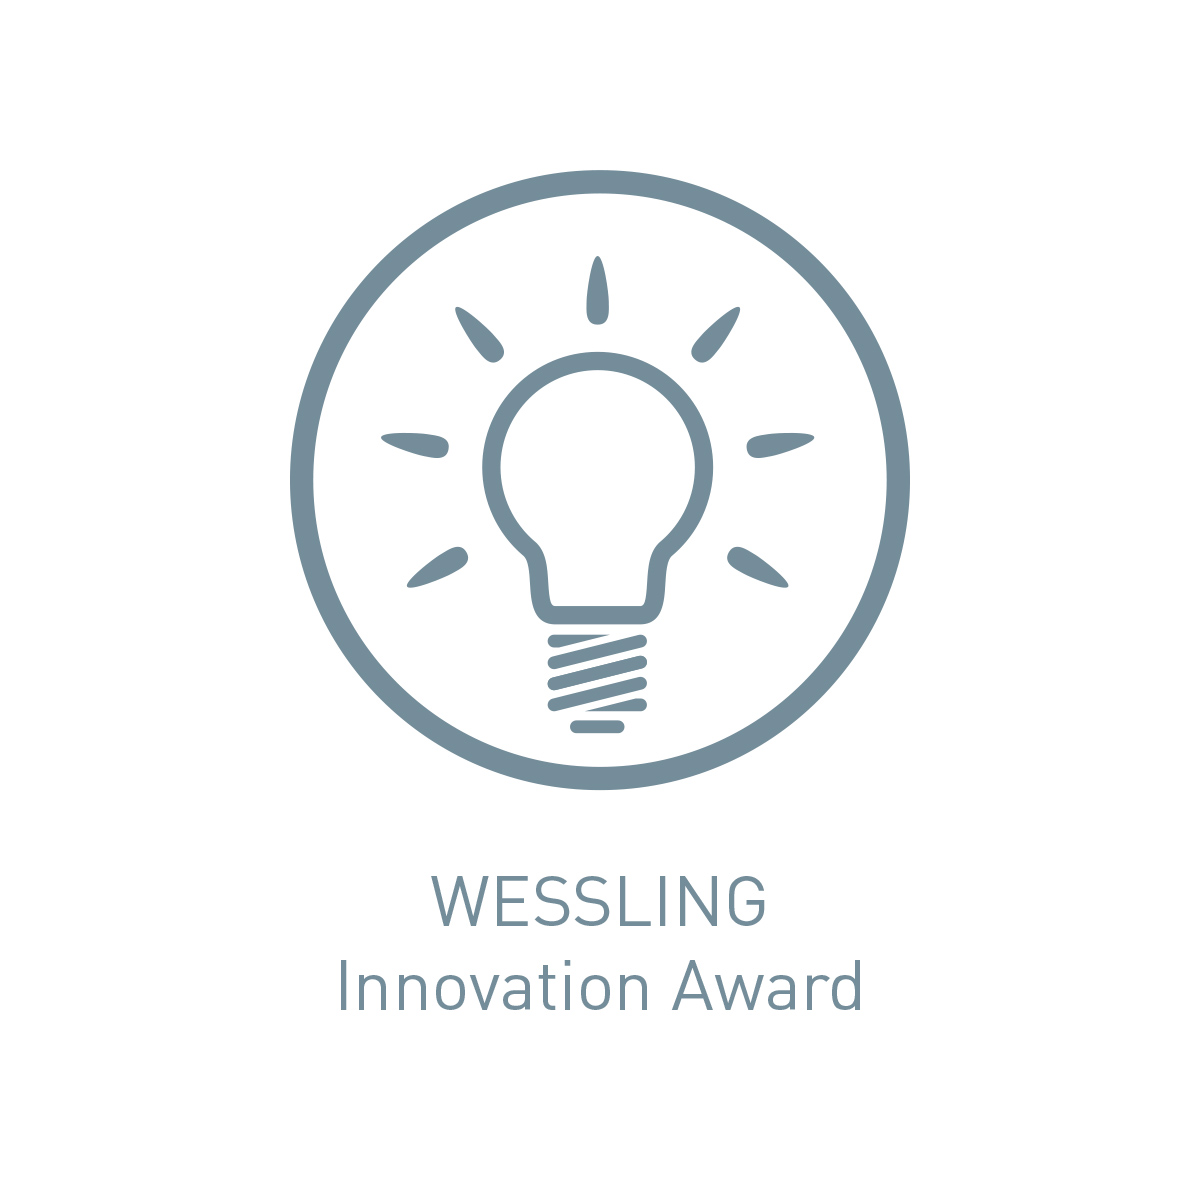 Icon WESSLING Innovation Award